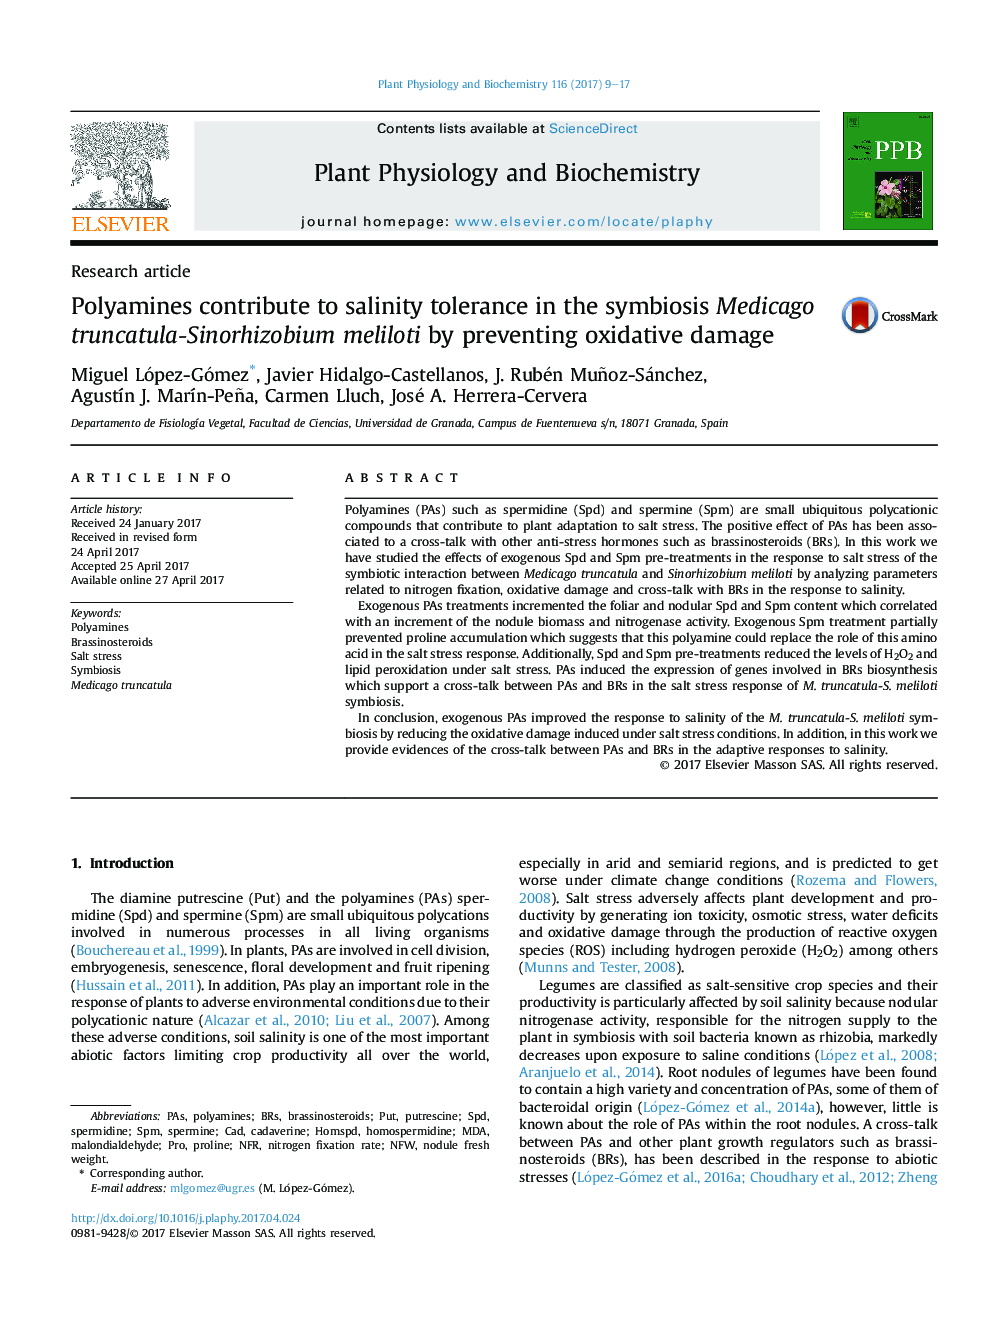 Research articlePolyamines contribute to salinity tolerance in the symbiosis Medicago truncatula-Sinorhizobium meliloti by preventing oxidative damage